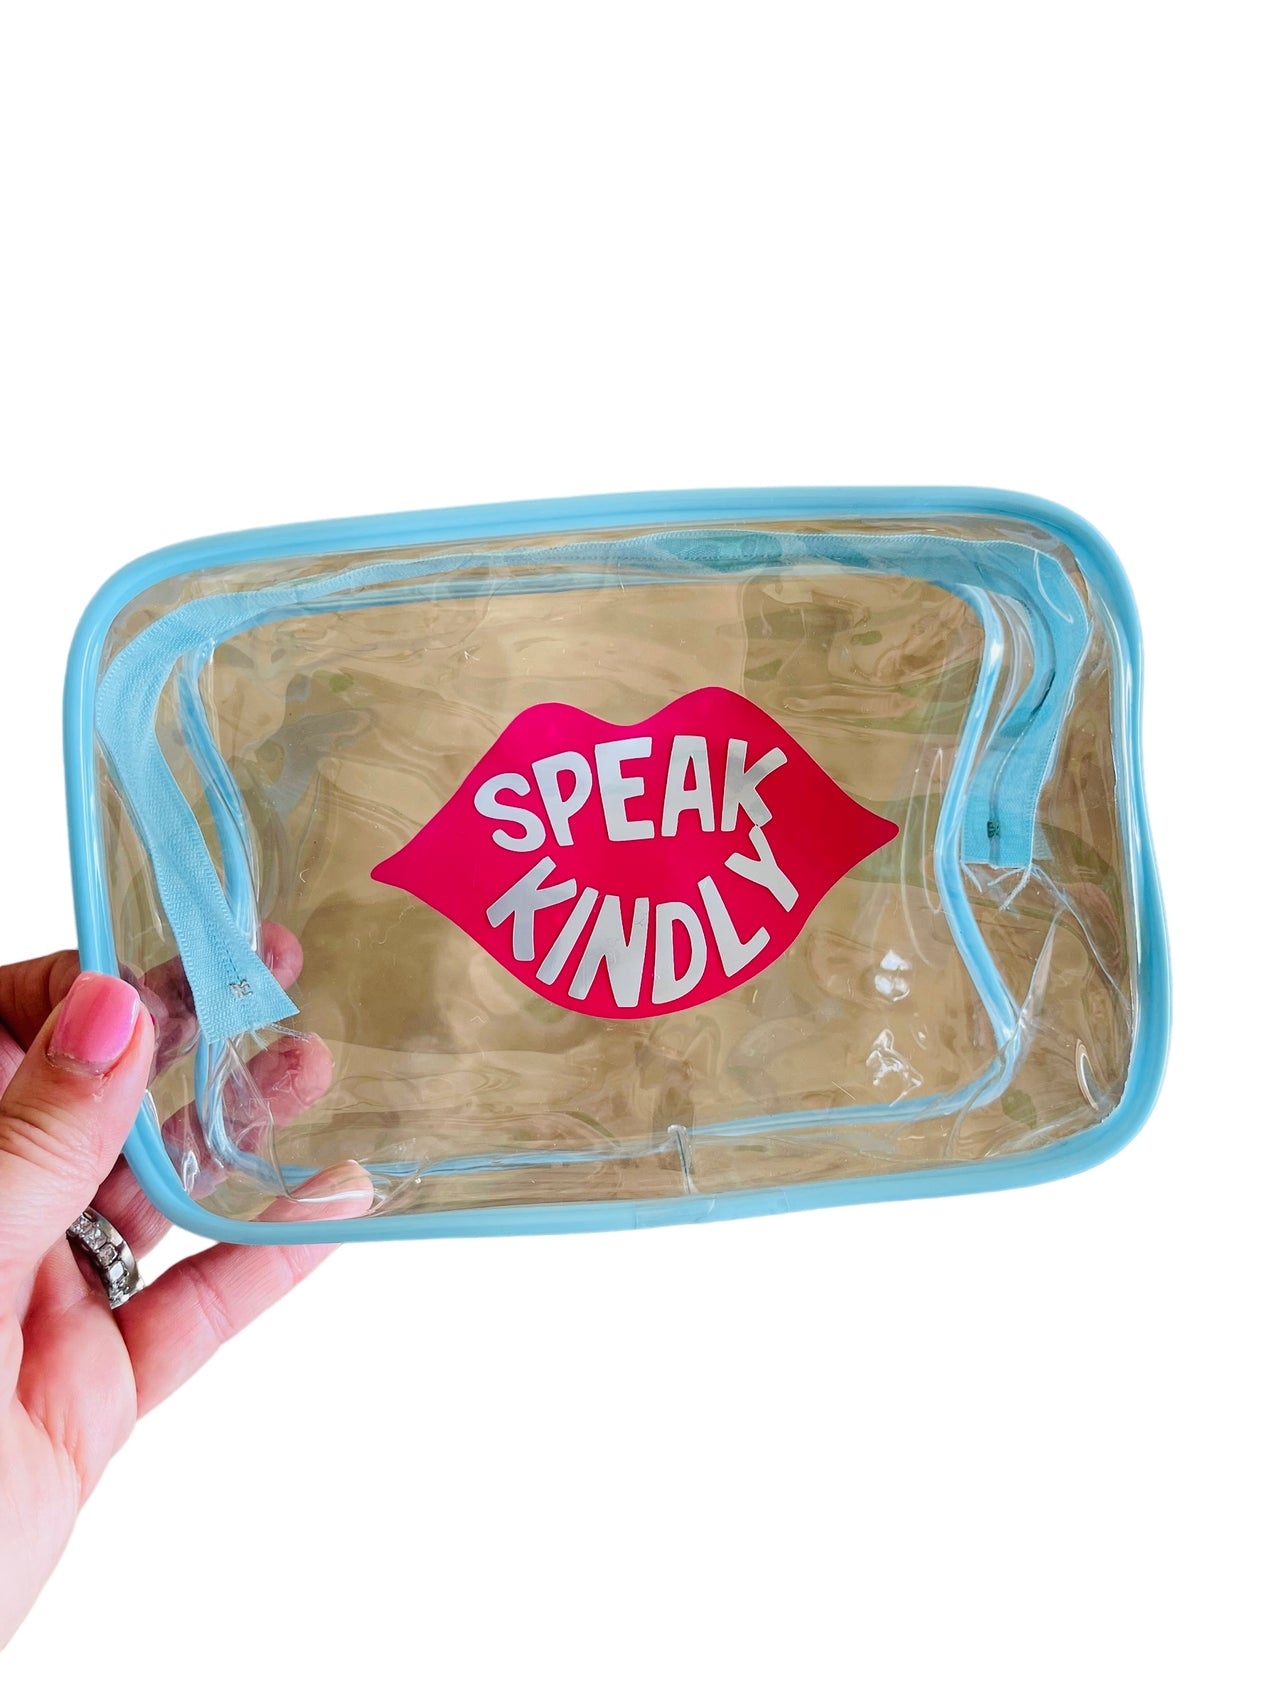 Speak kindly clear cosmetic bag